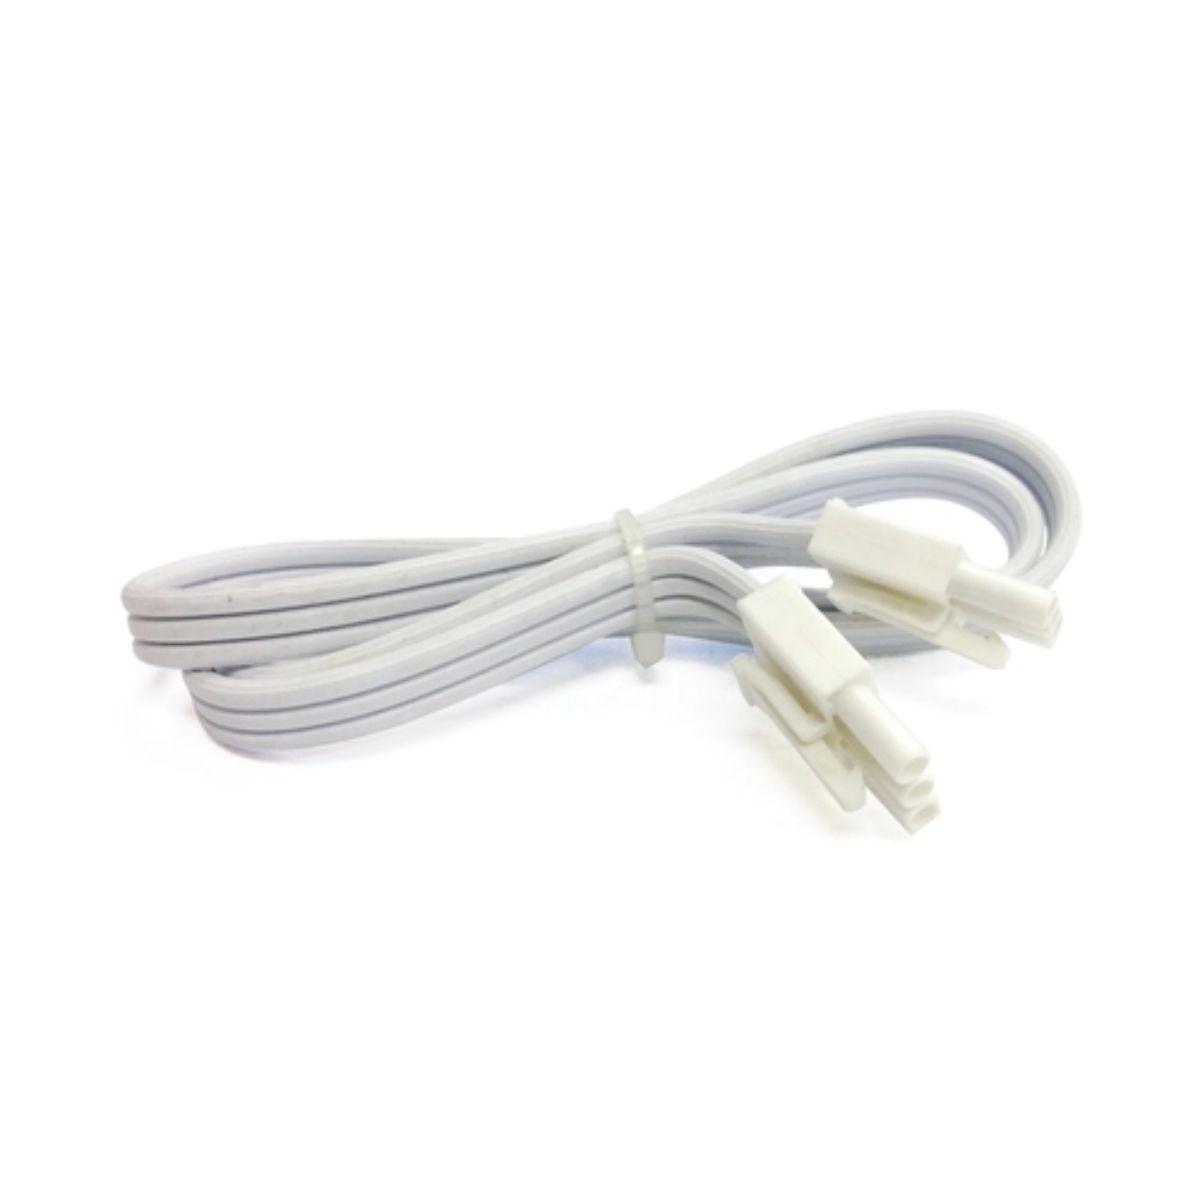 LEDUR 6in. Jumper Cable, White